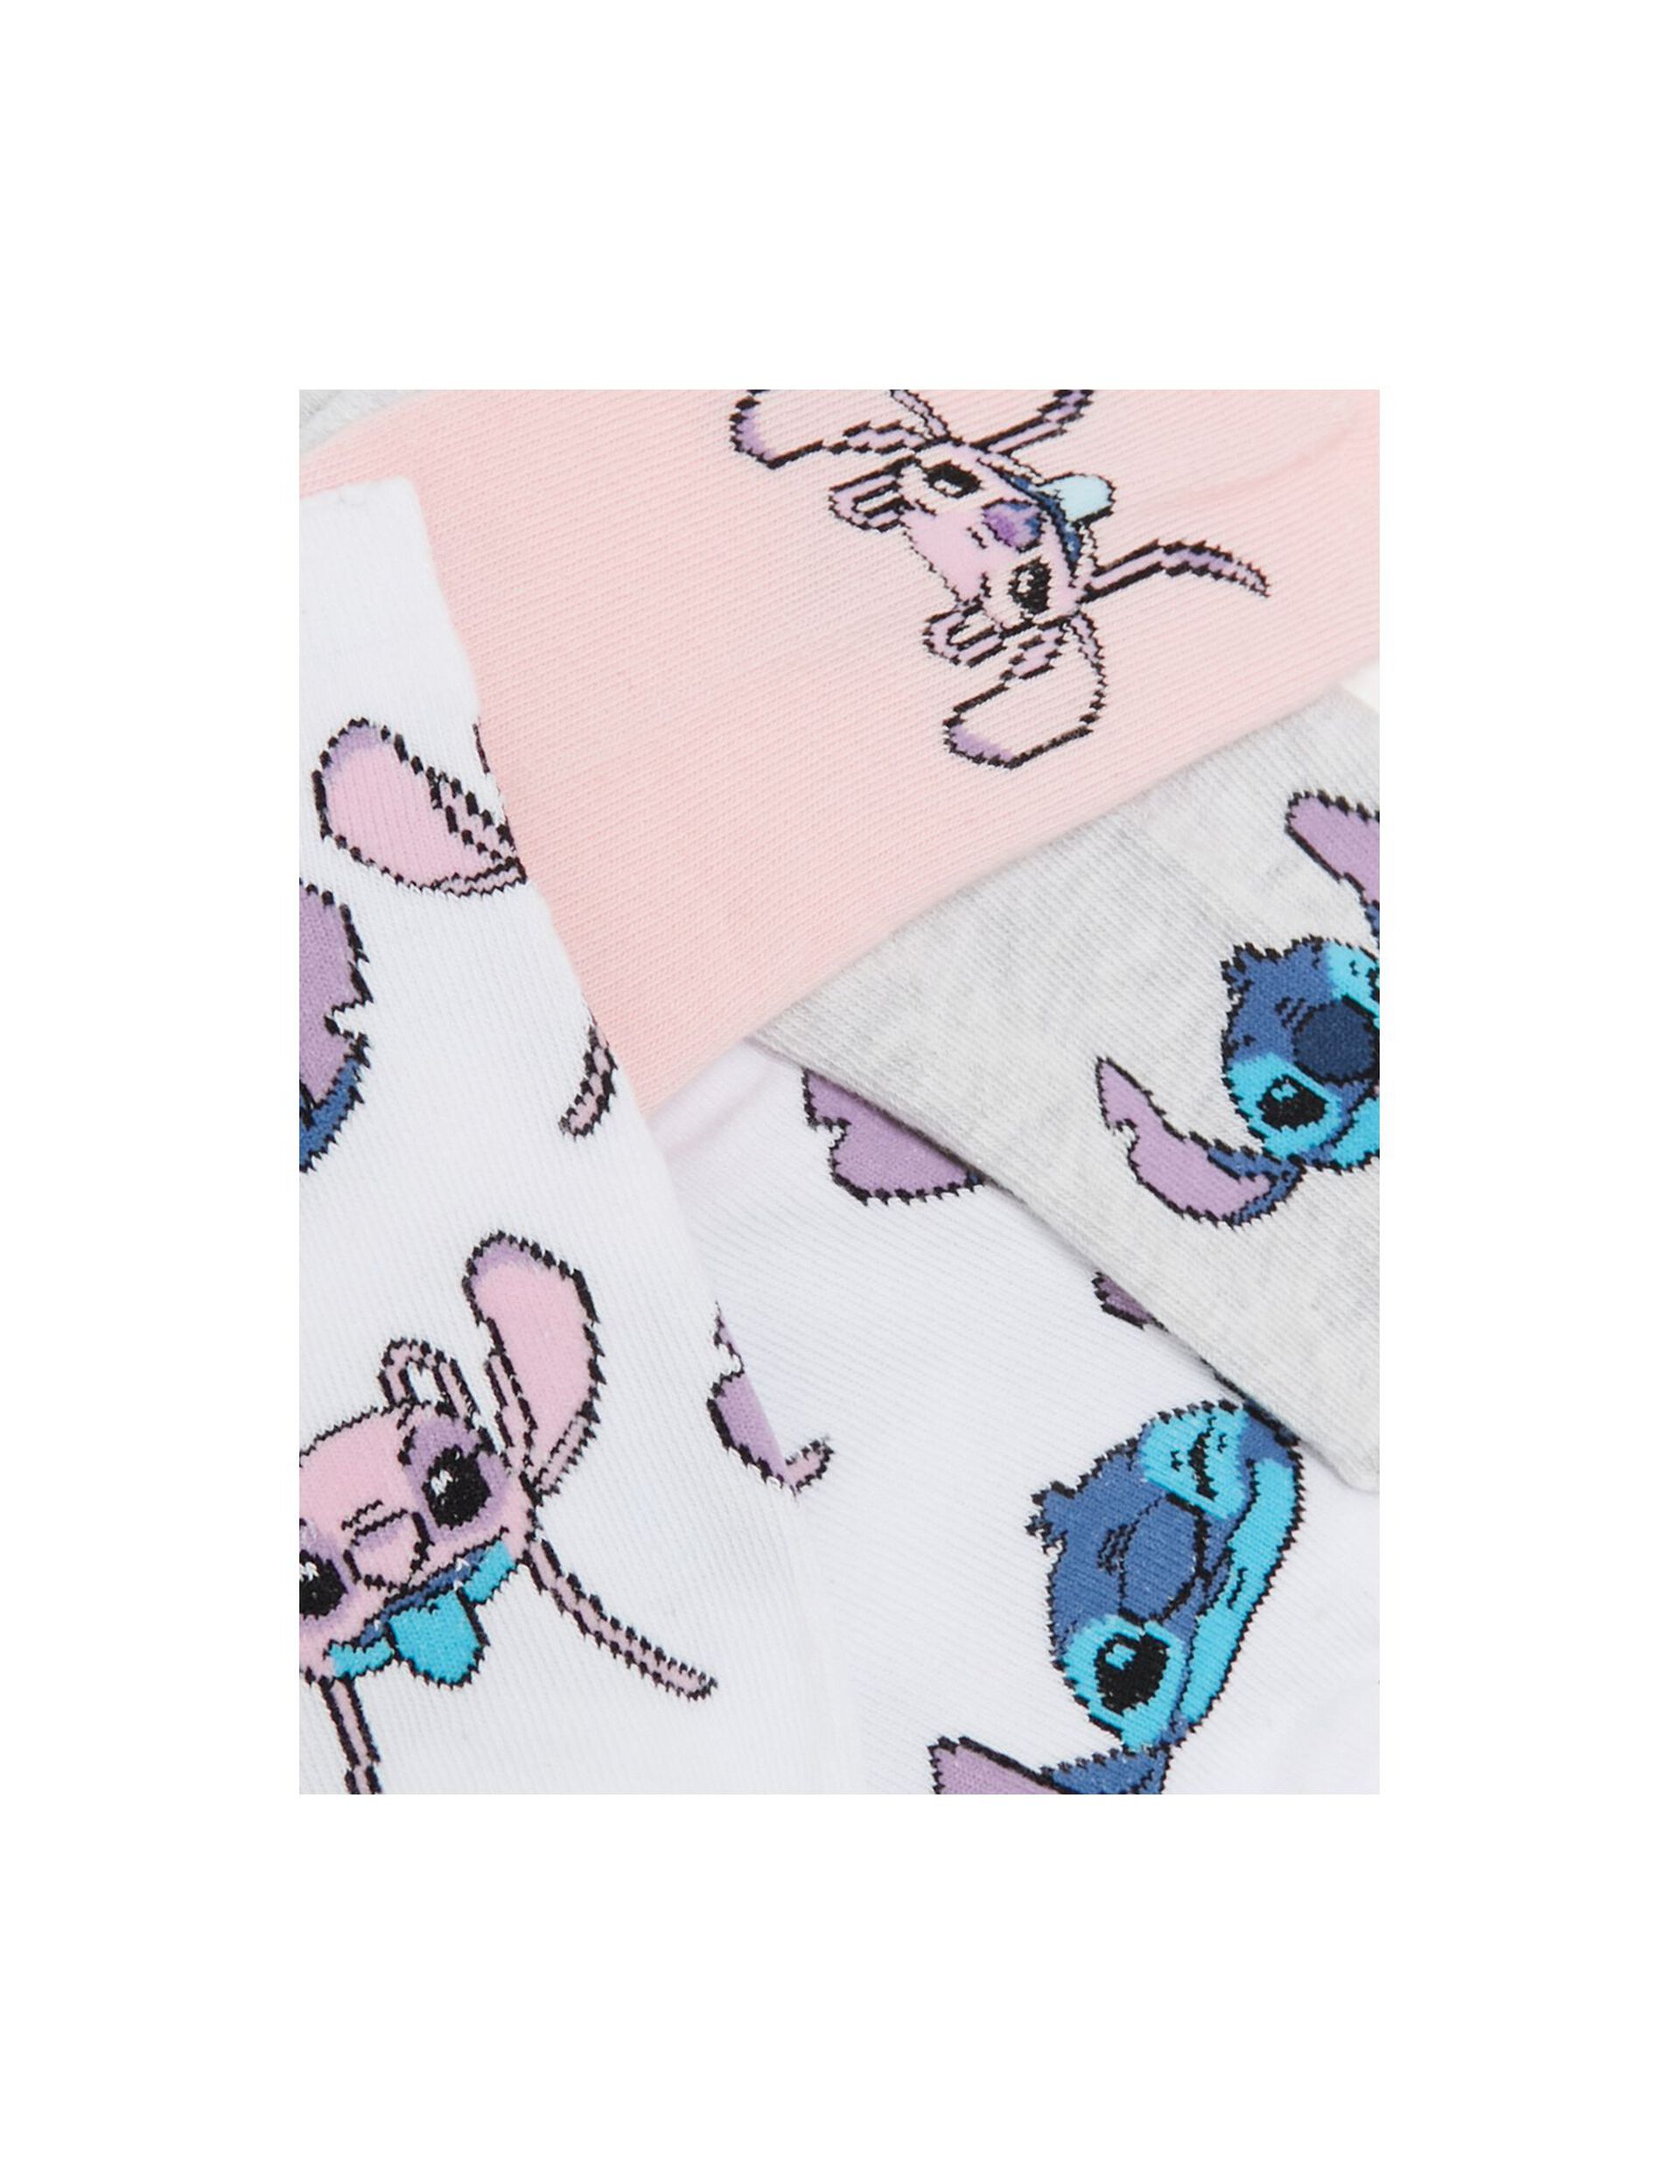 Chaussettes duveteuses Disney Stitch Ado / Fille / Femme • Jennyfer